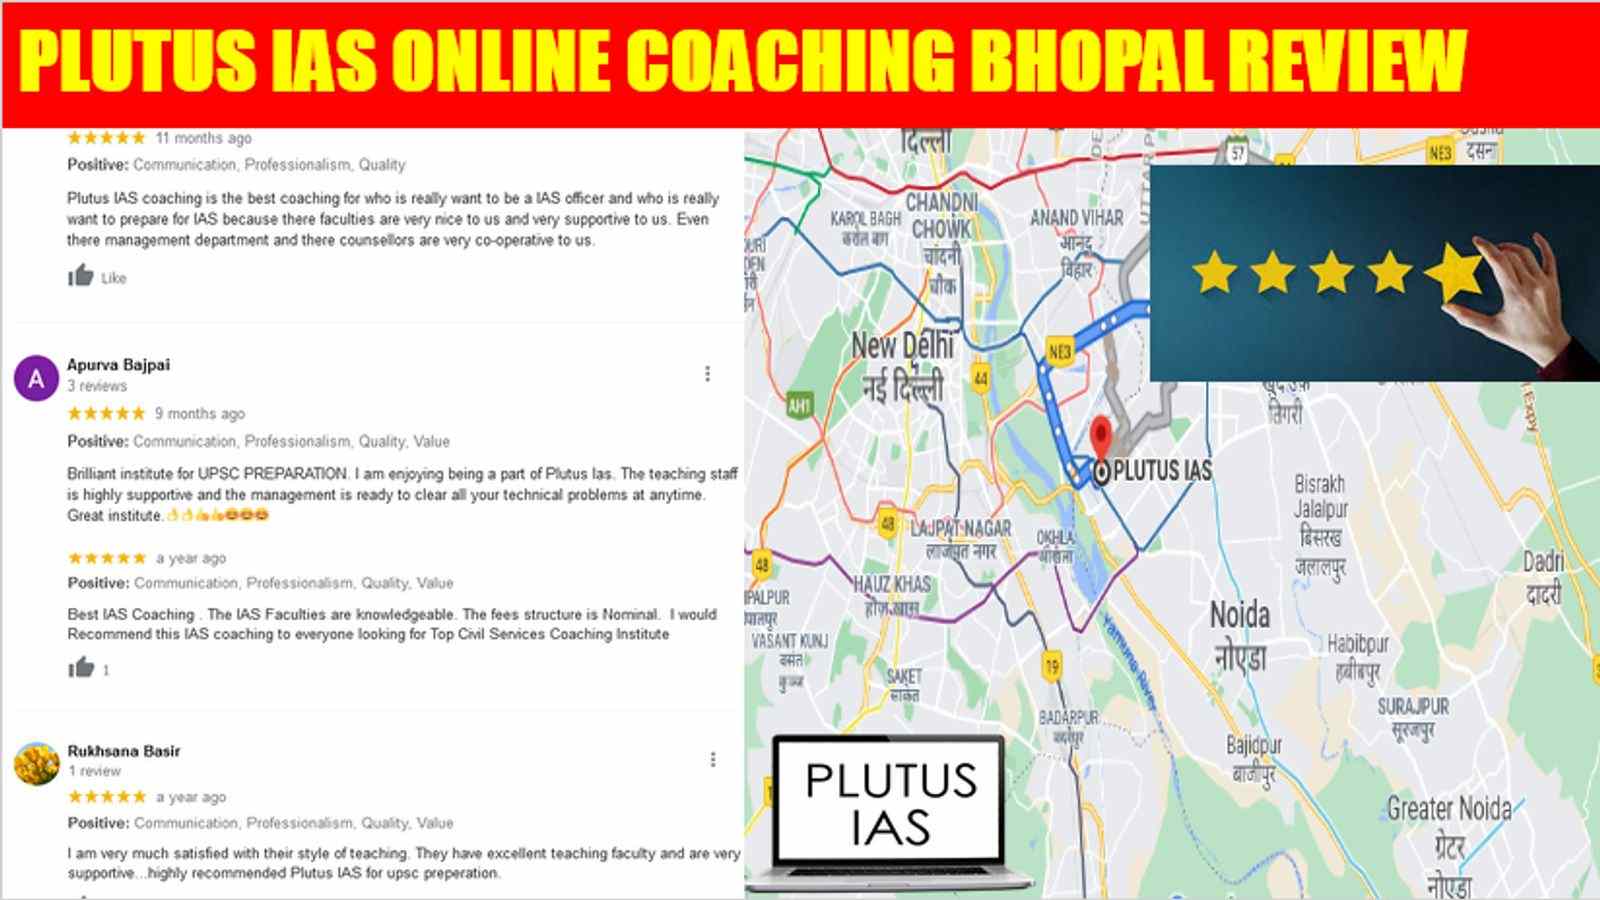 Plutus IAS Online Coaching Bhopal Review